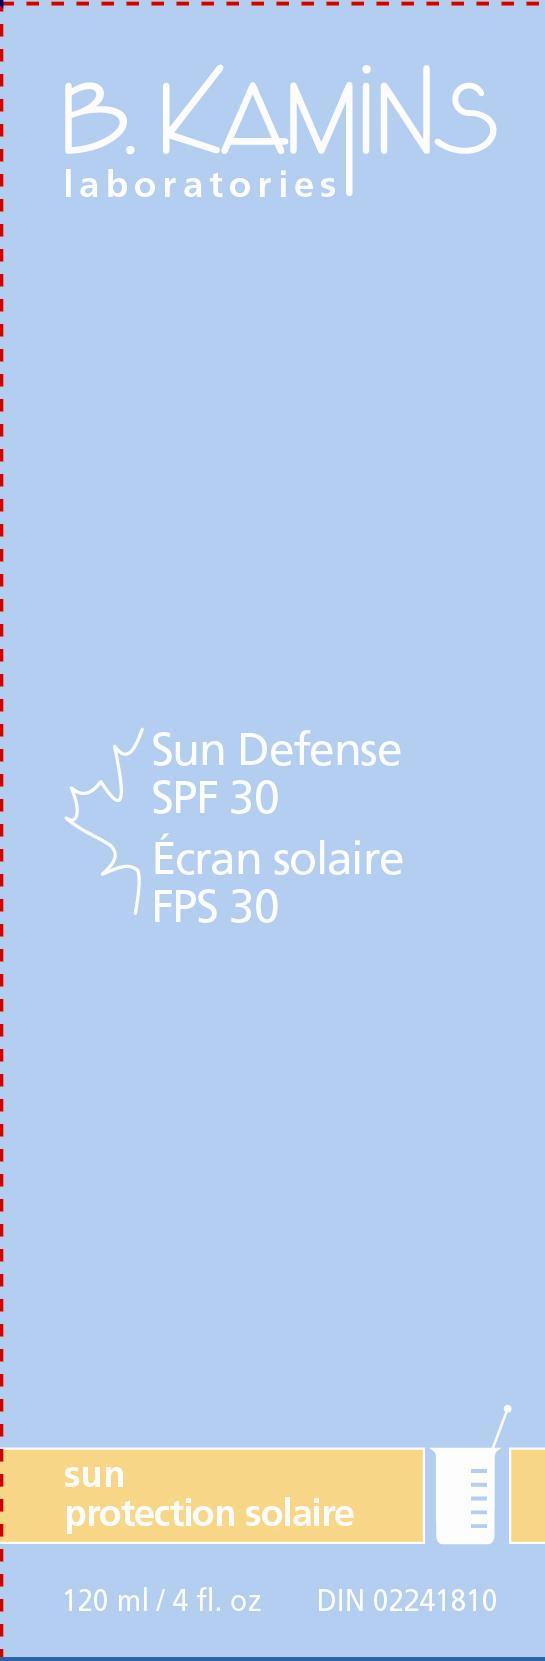 Sun Defense SPF front panel image